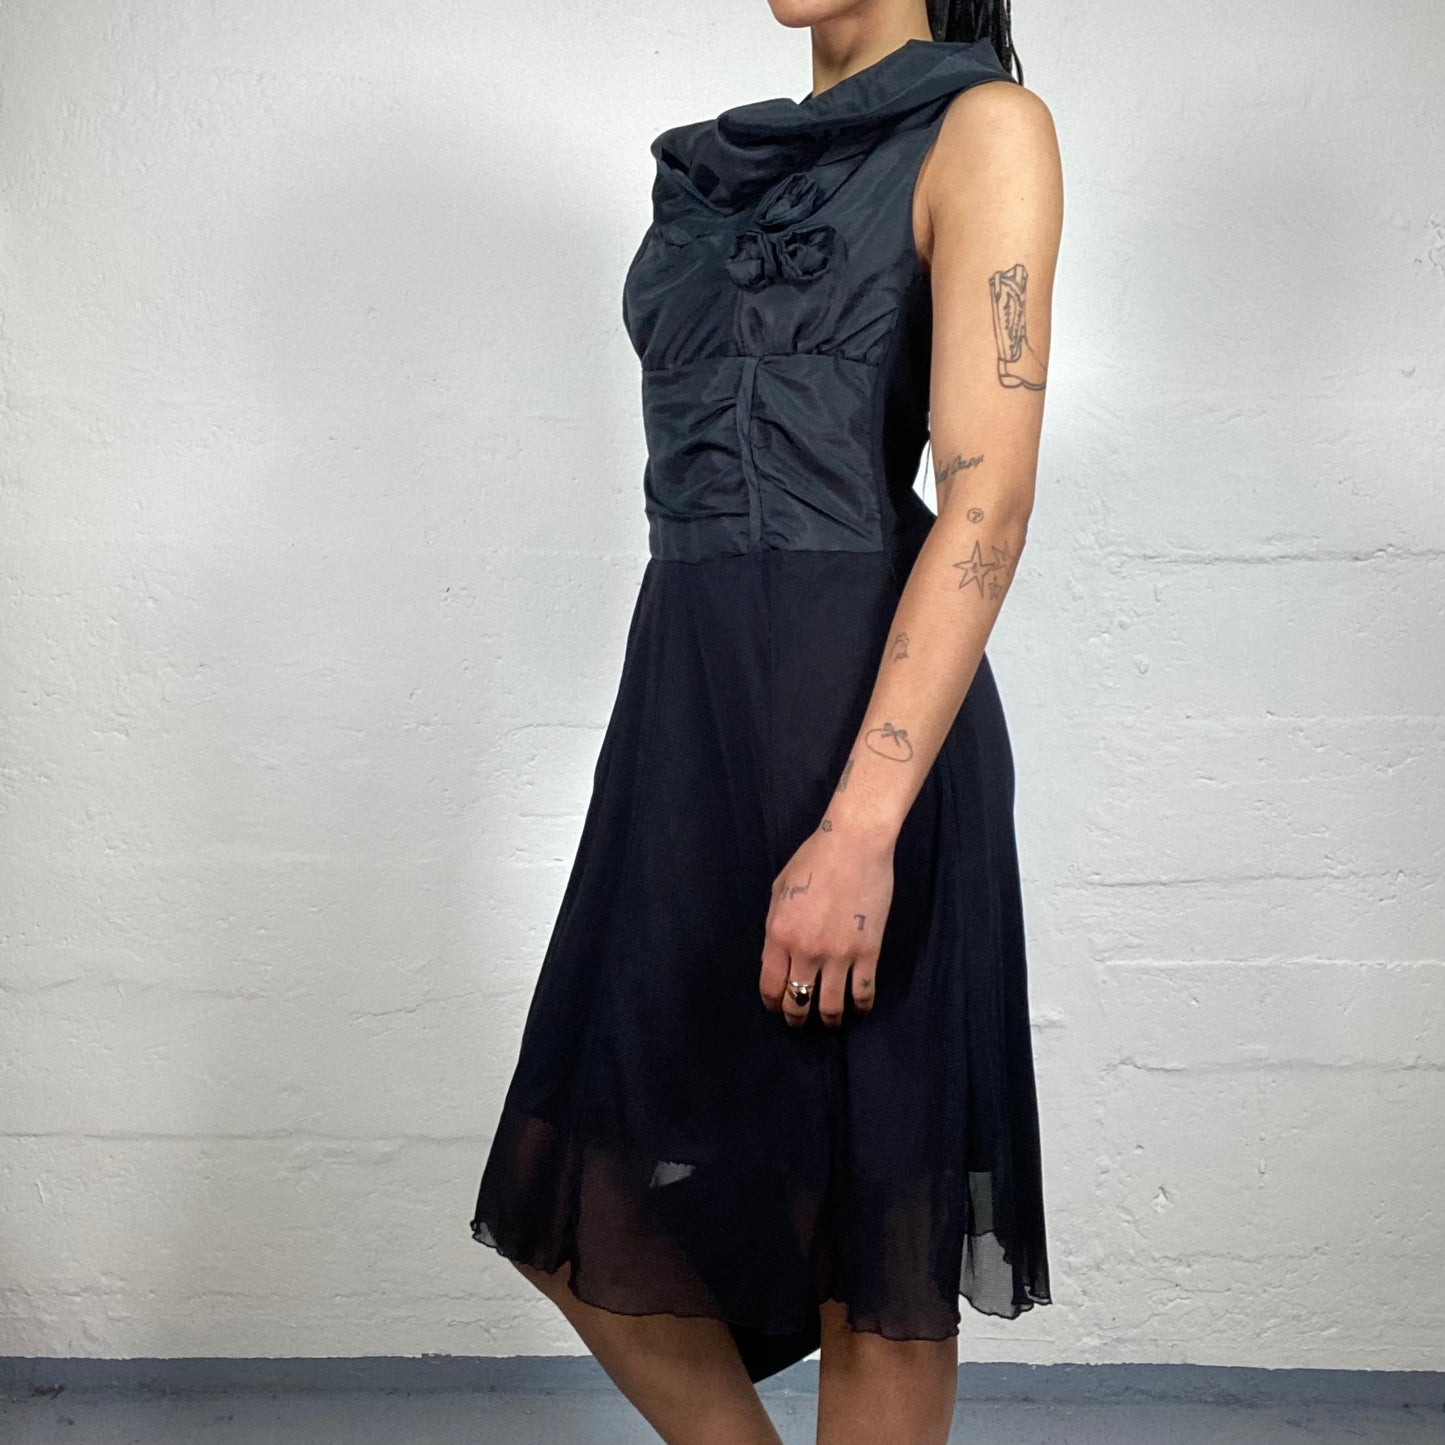 Vintage 2000's Glamorous Black Nylon Top Roses Embroidery and Chiffon Skirt Dress (M)